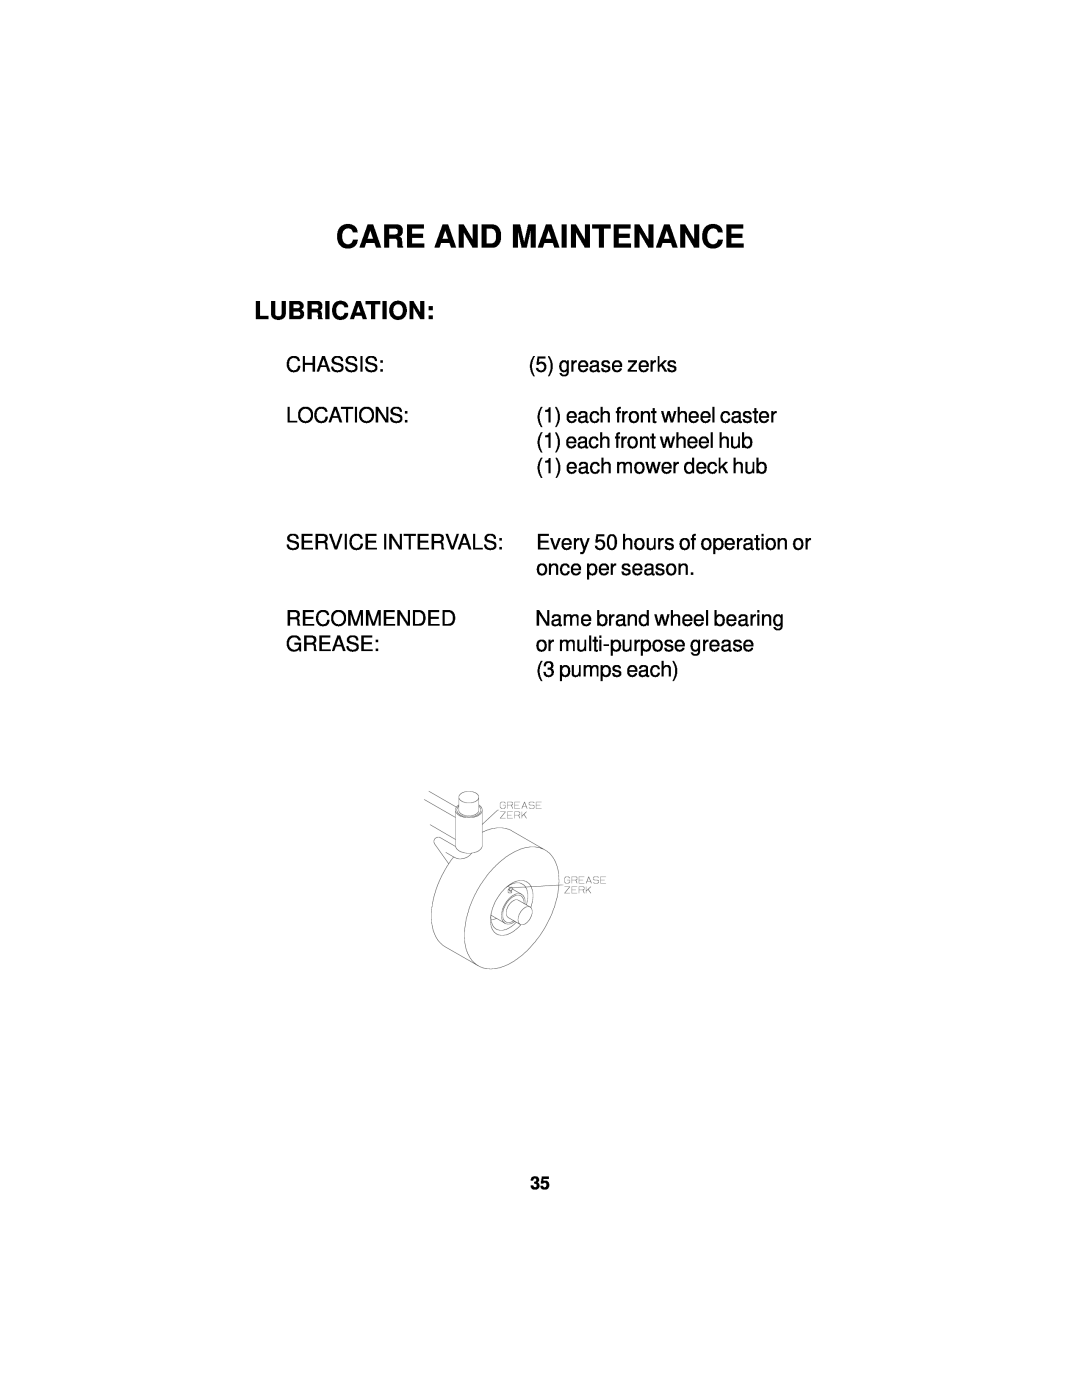 Dixon 14295-0804 manual Lubrication, Care And Maintenance 